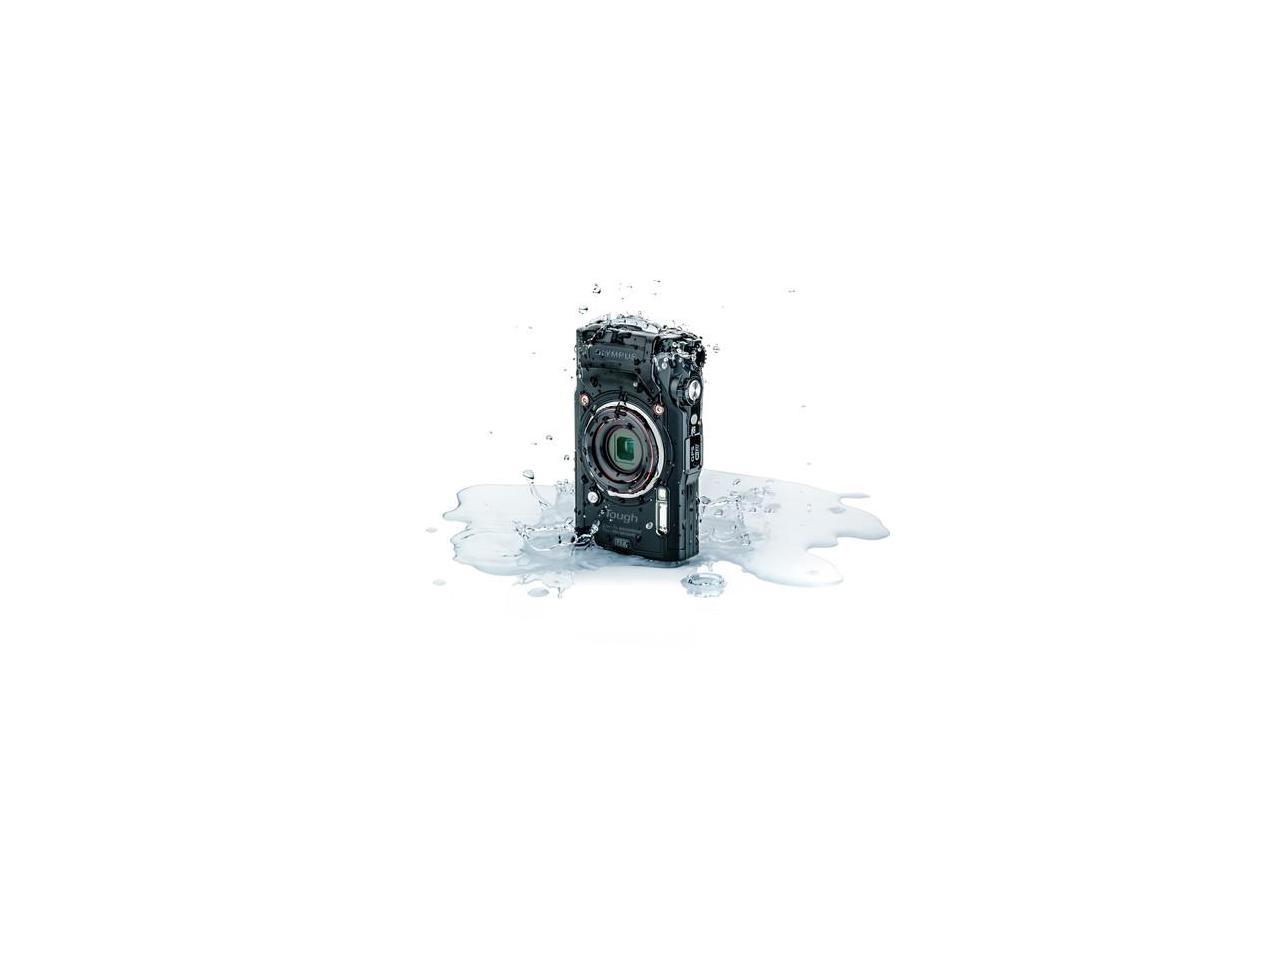 Olympus Tough TG-6 Digital Camera Essentials Bundle (Black)